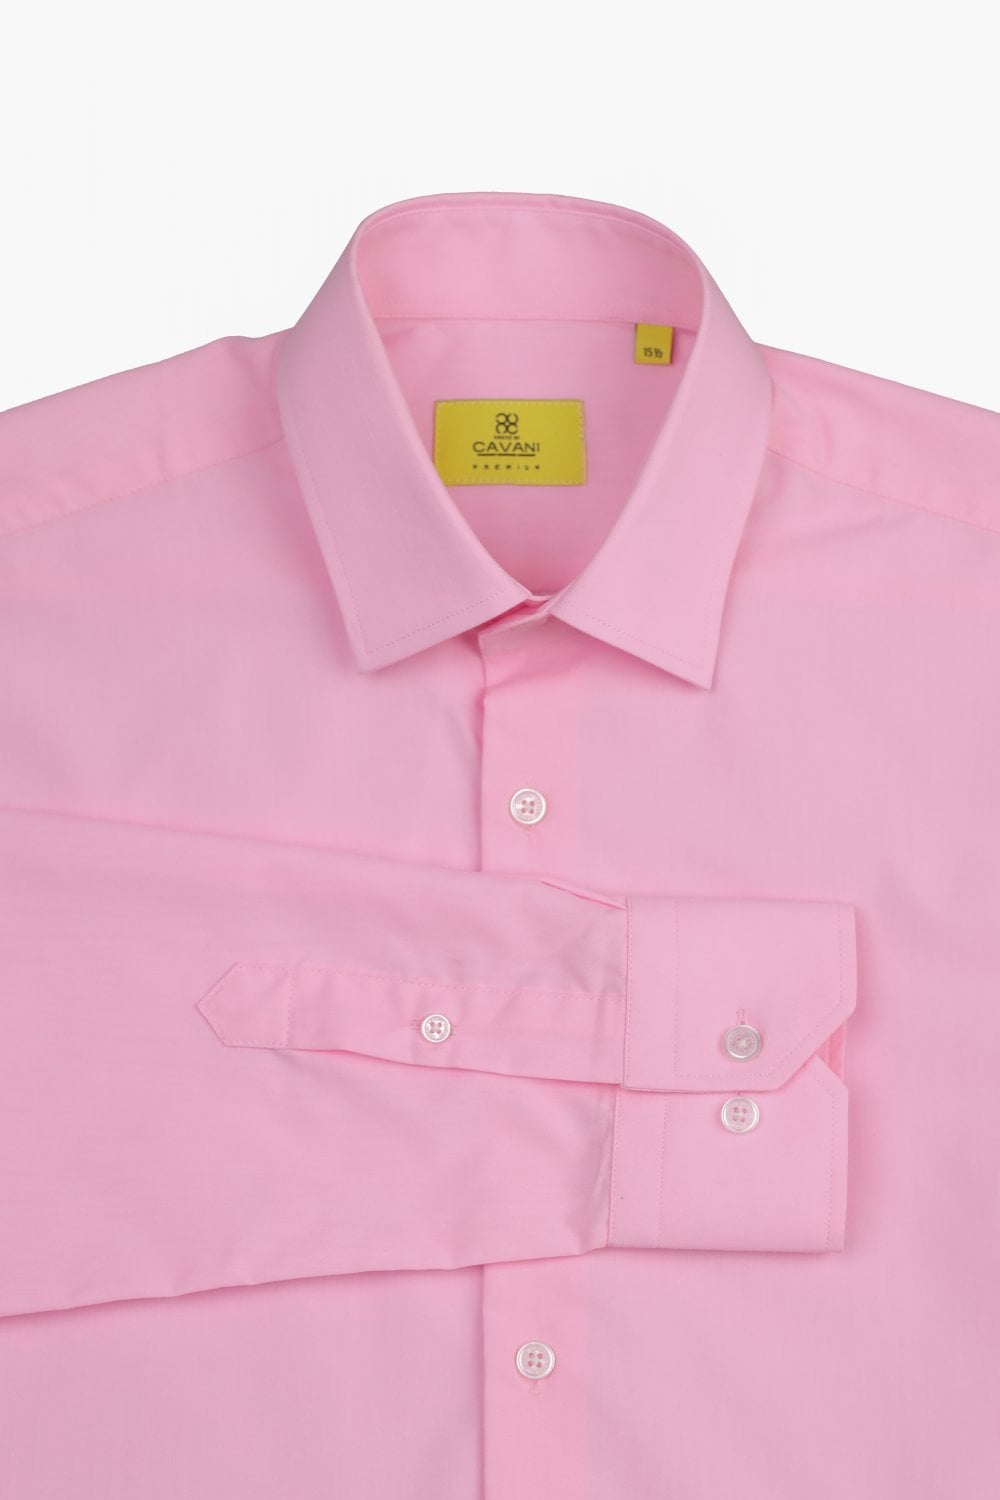 Miatti Pink Long Sleeve Shirt - OOS 31/7/23 - Shirts - 14.5" - THREADPEPPER